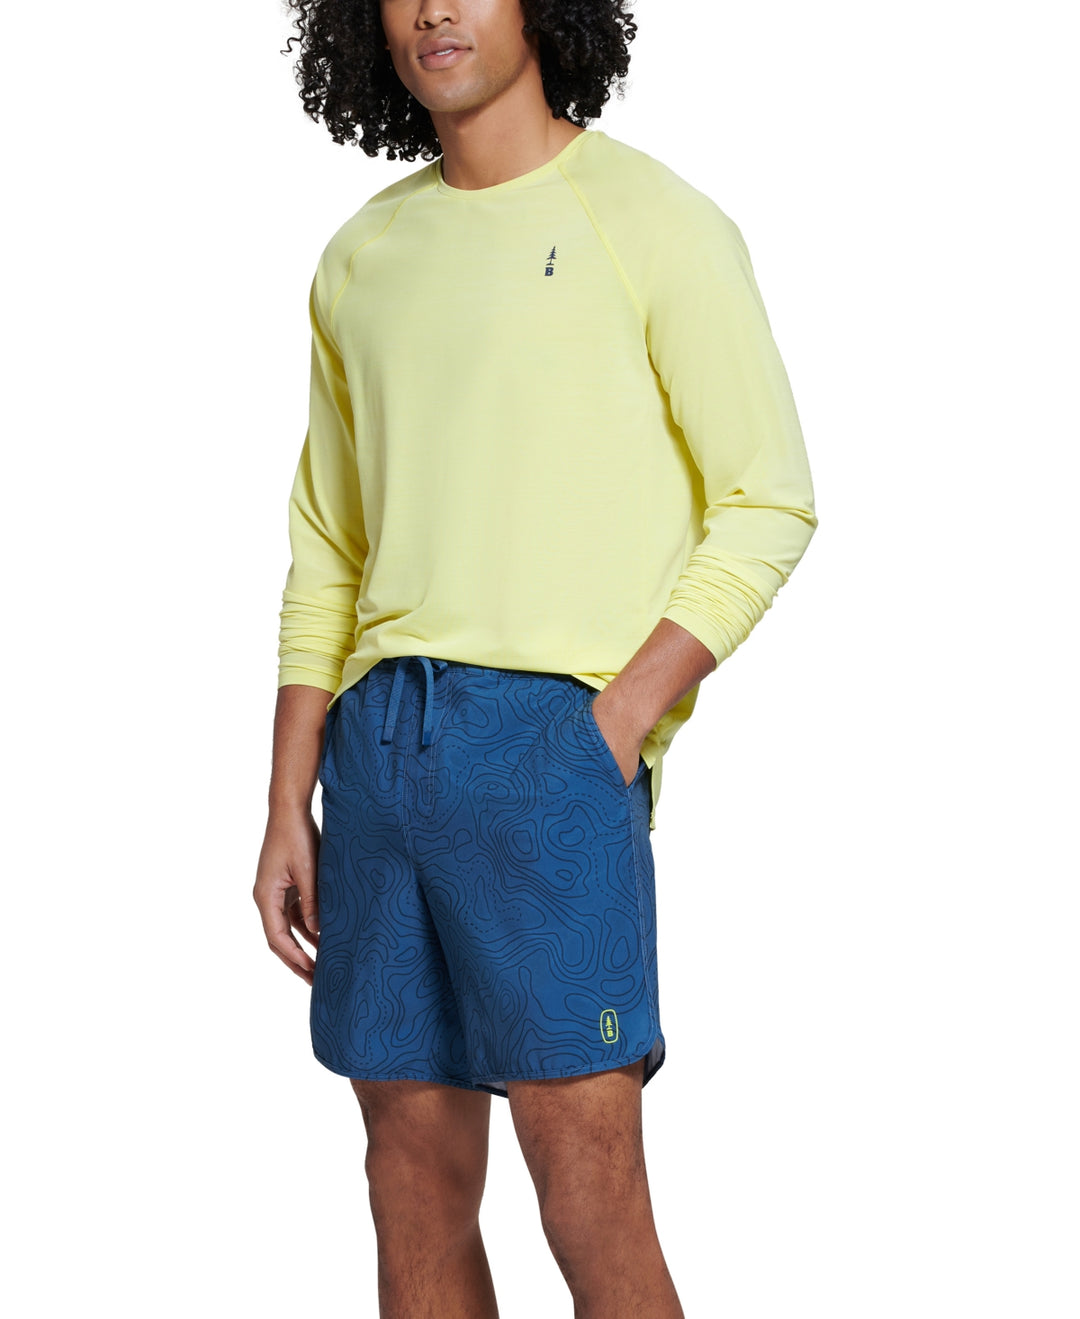 Bass Outdoor Men's Fitness Long Sleeve Shirts Yellow